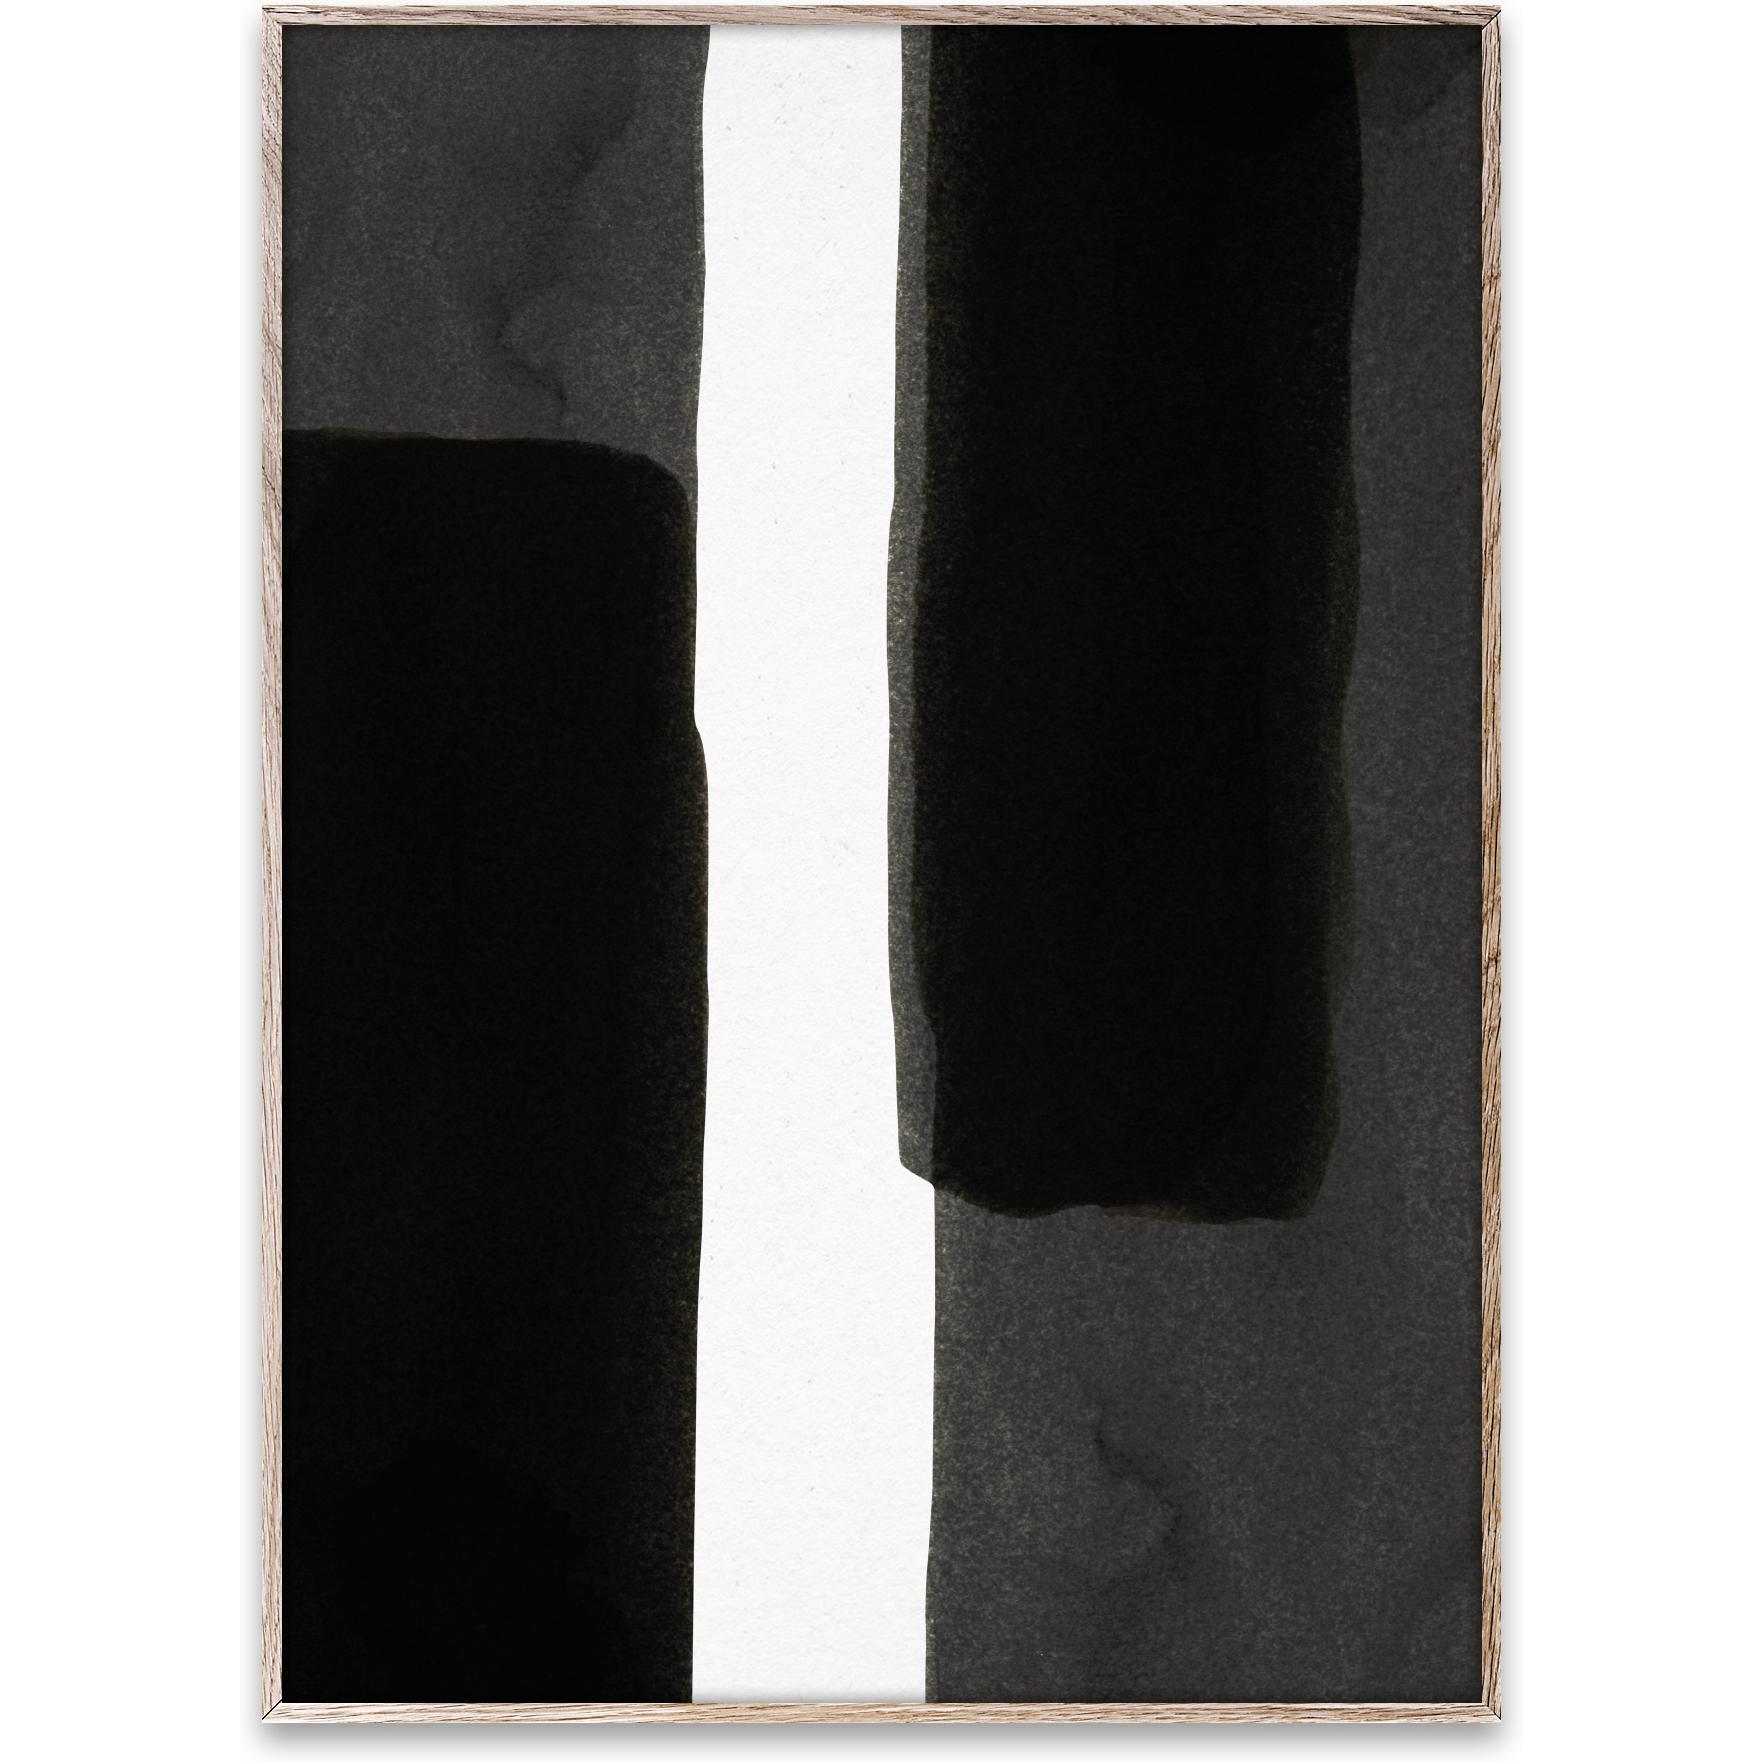 Paper Collective Enso -affisch 30x40 cm, svart i